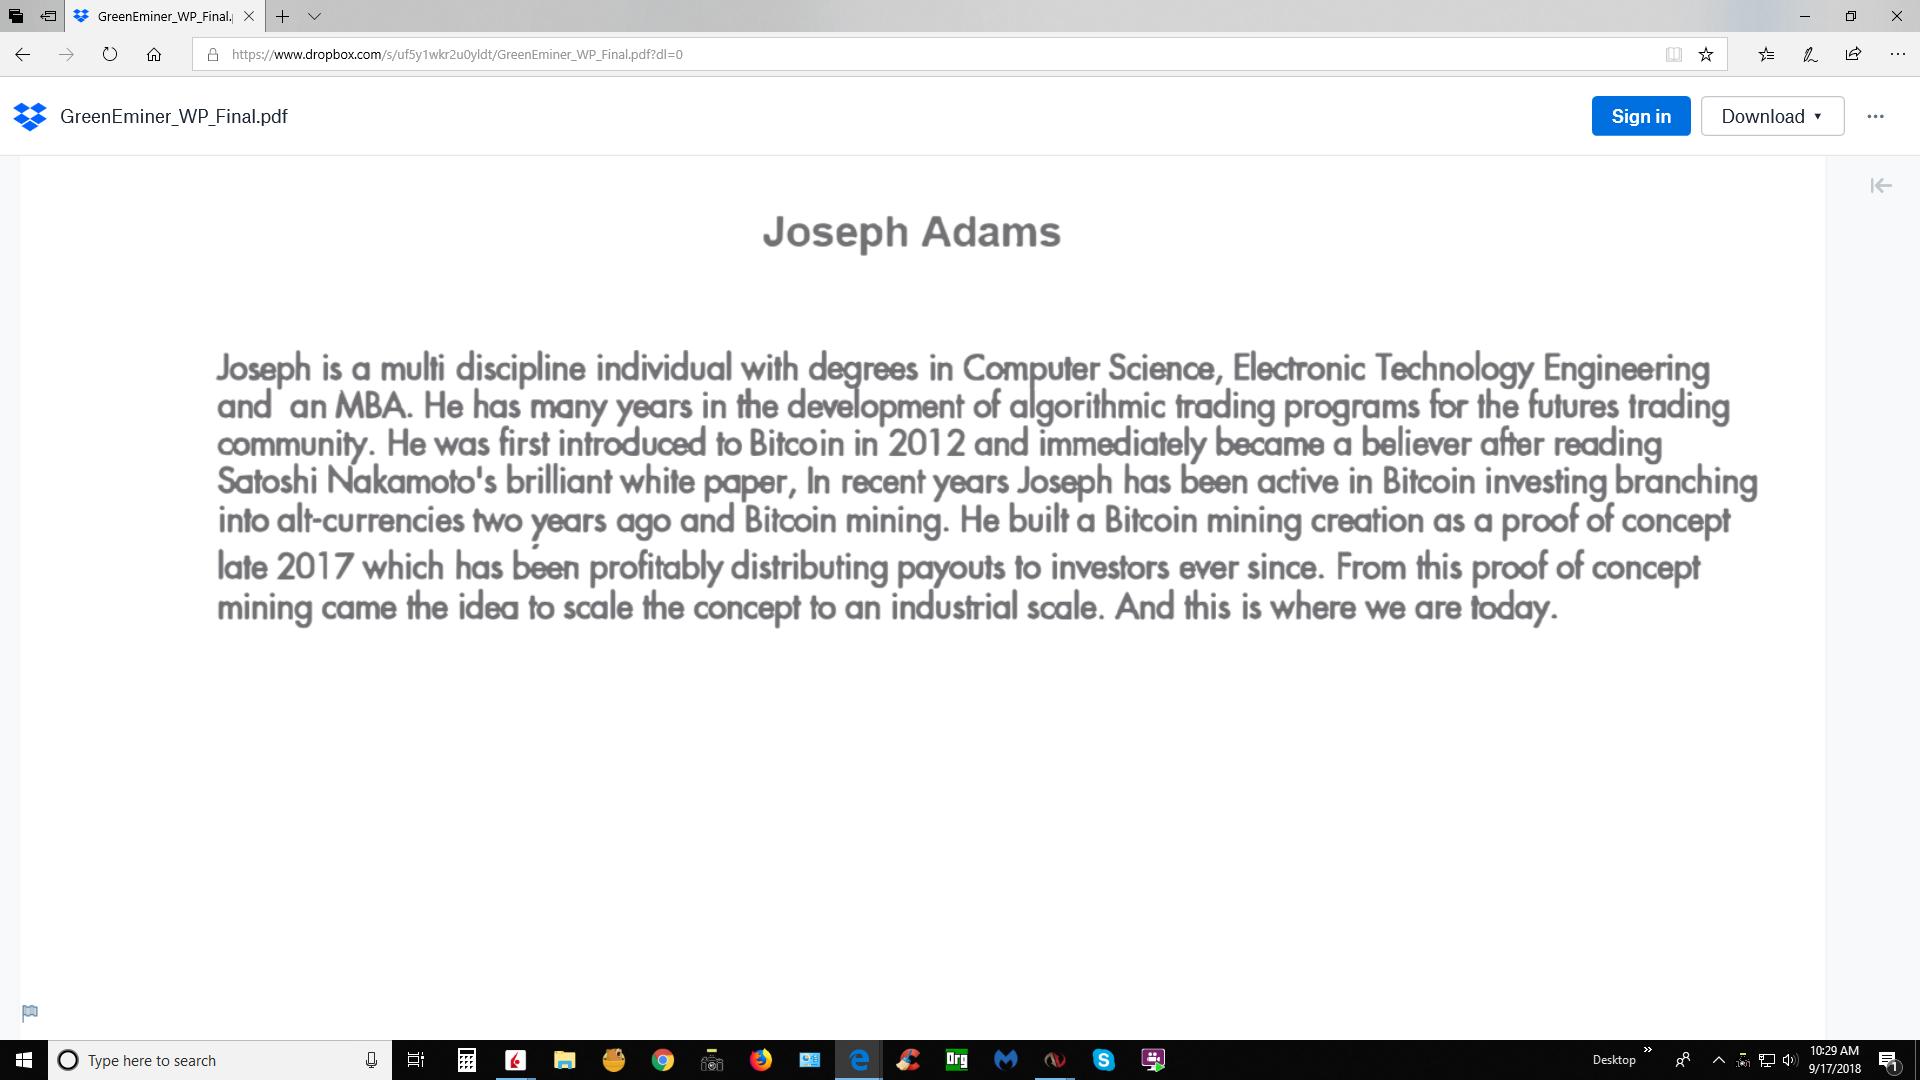 Joseph Adams Bio